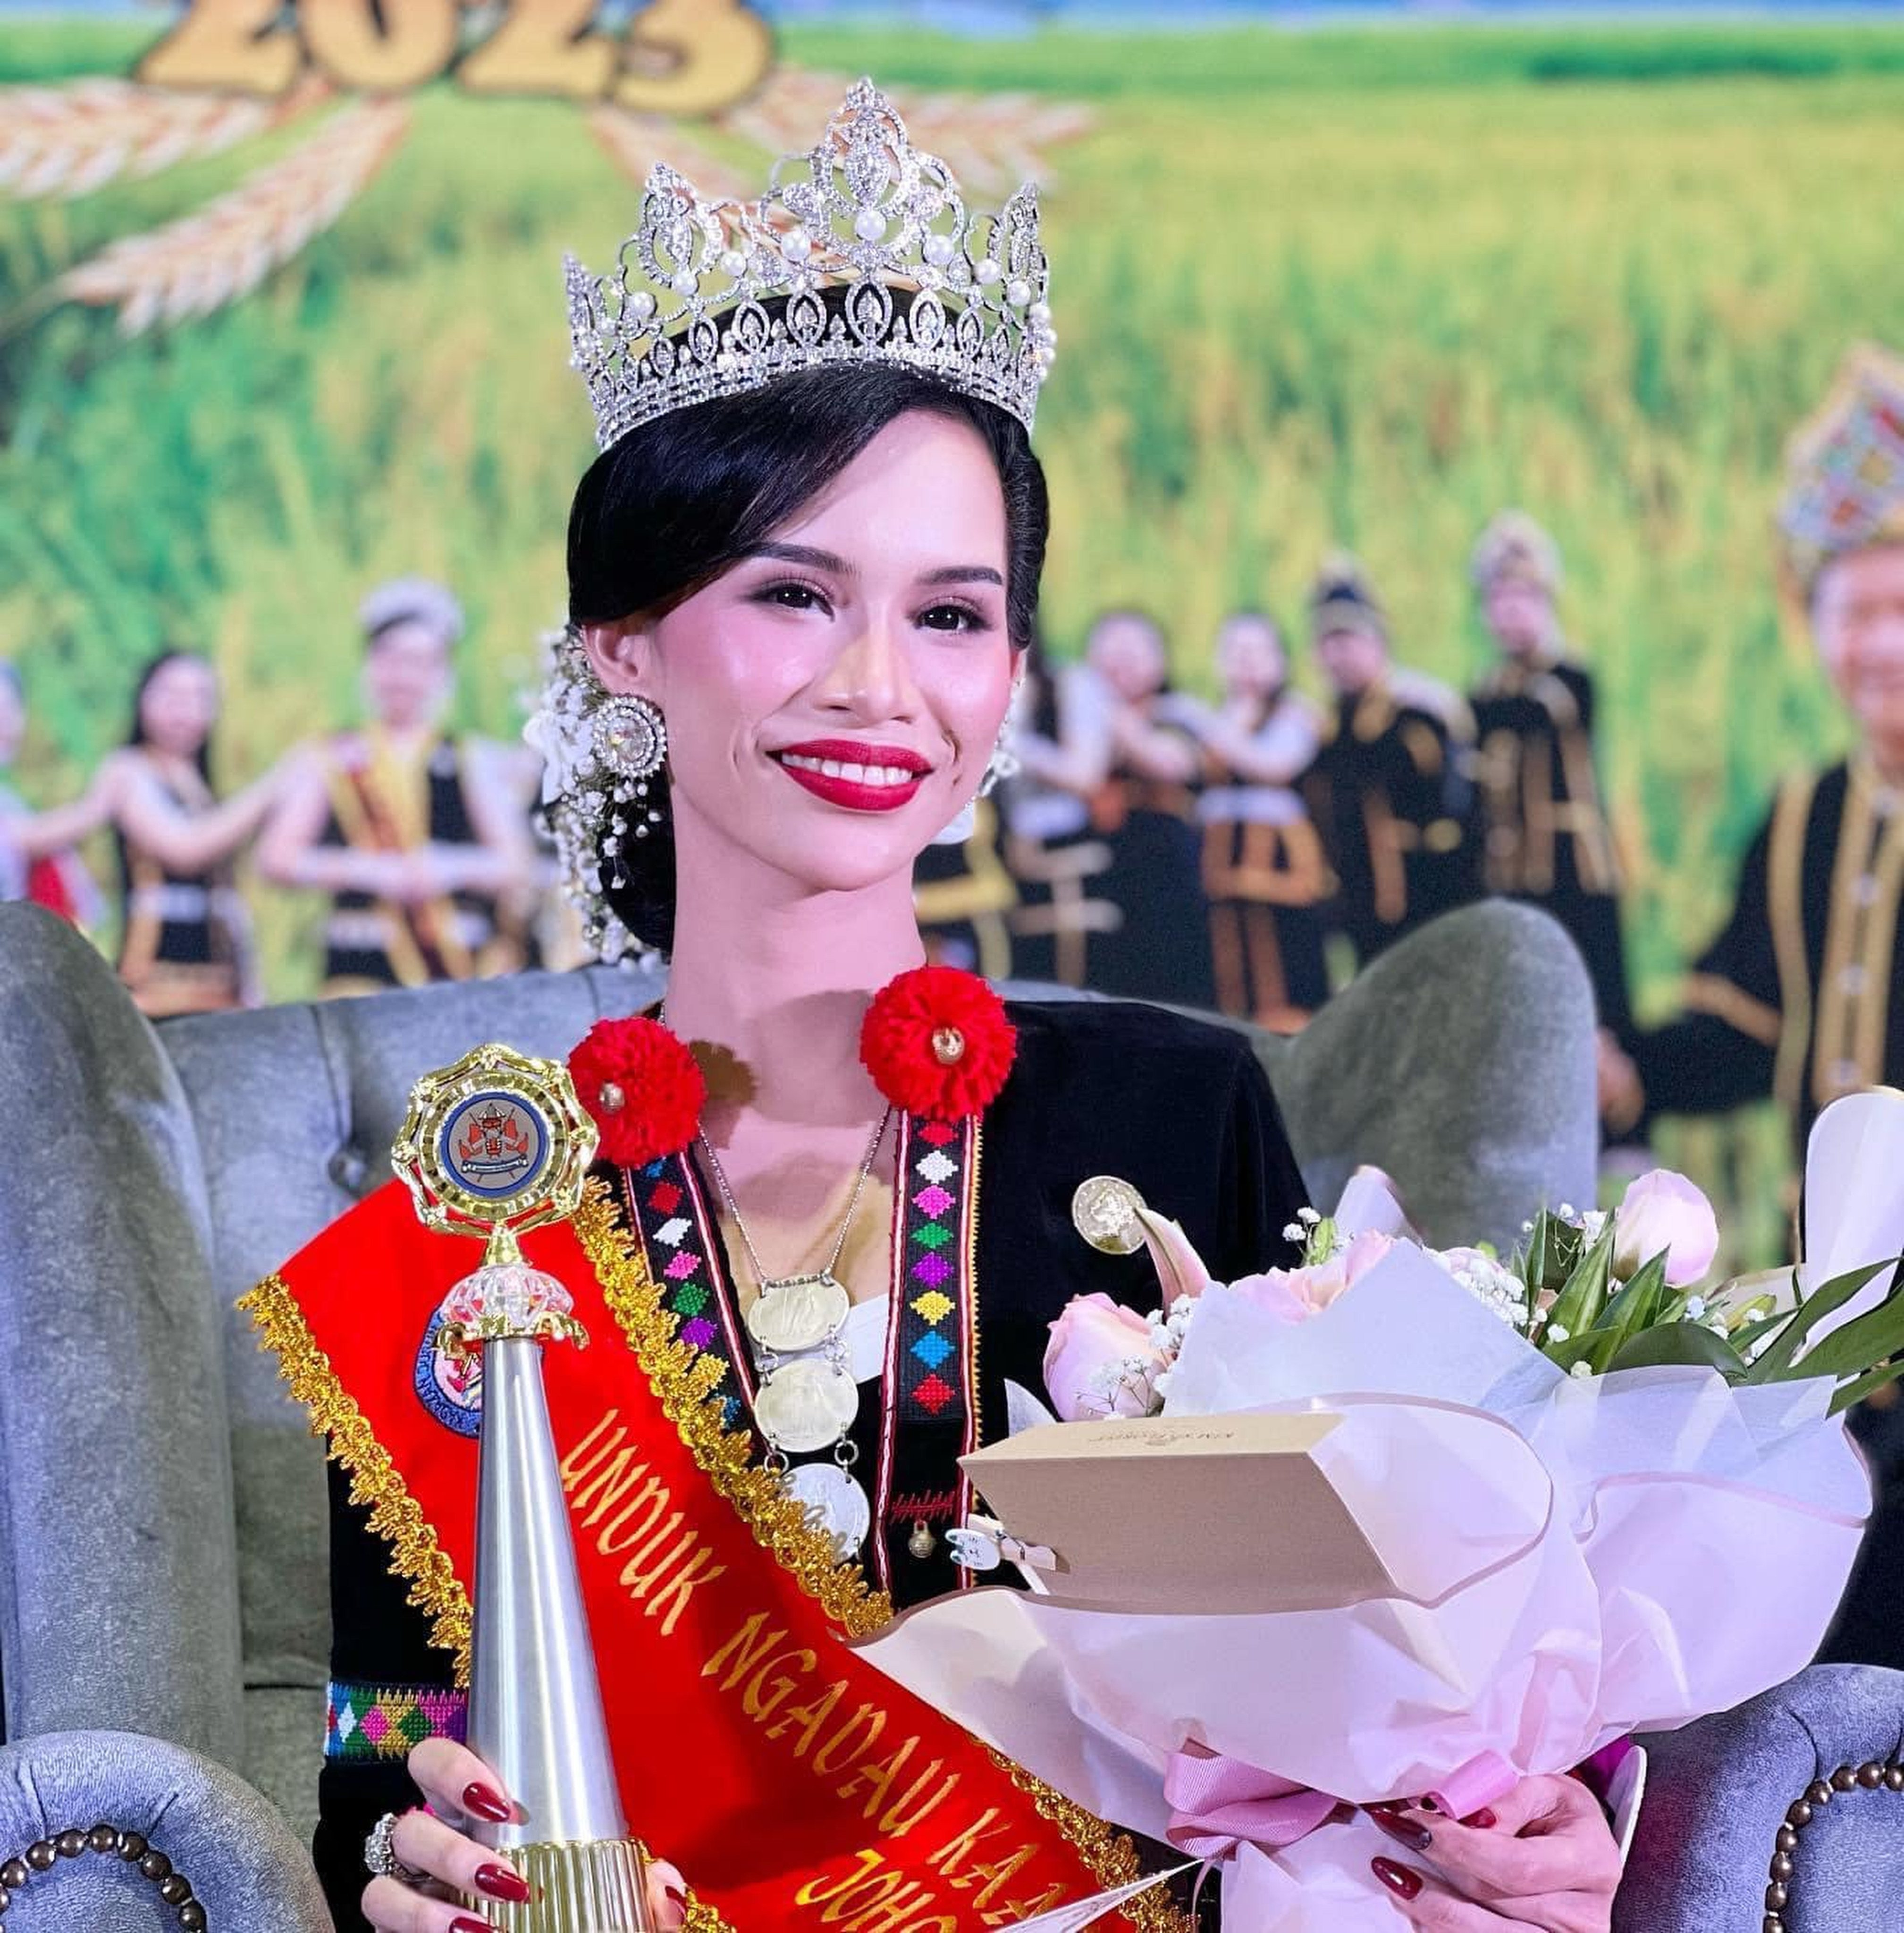 Malaysian Tiktokker turned beauty queen Viru Nikah Terinsip. Photo: Facebook/ViruNikahTerinisip